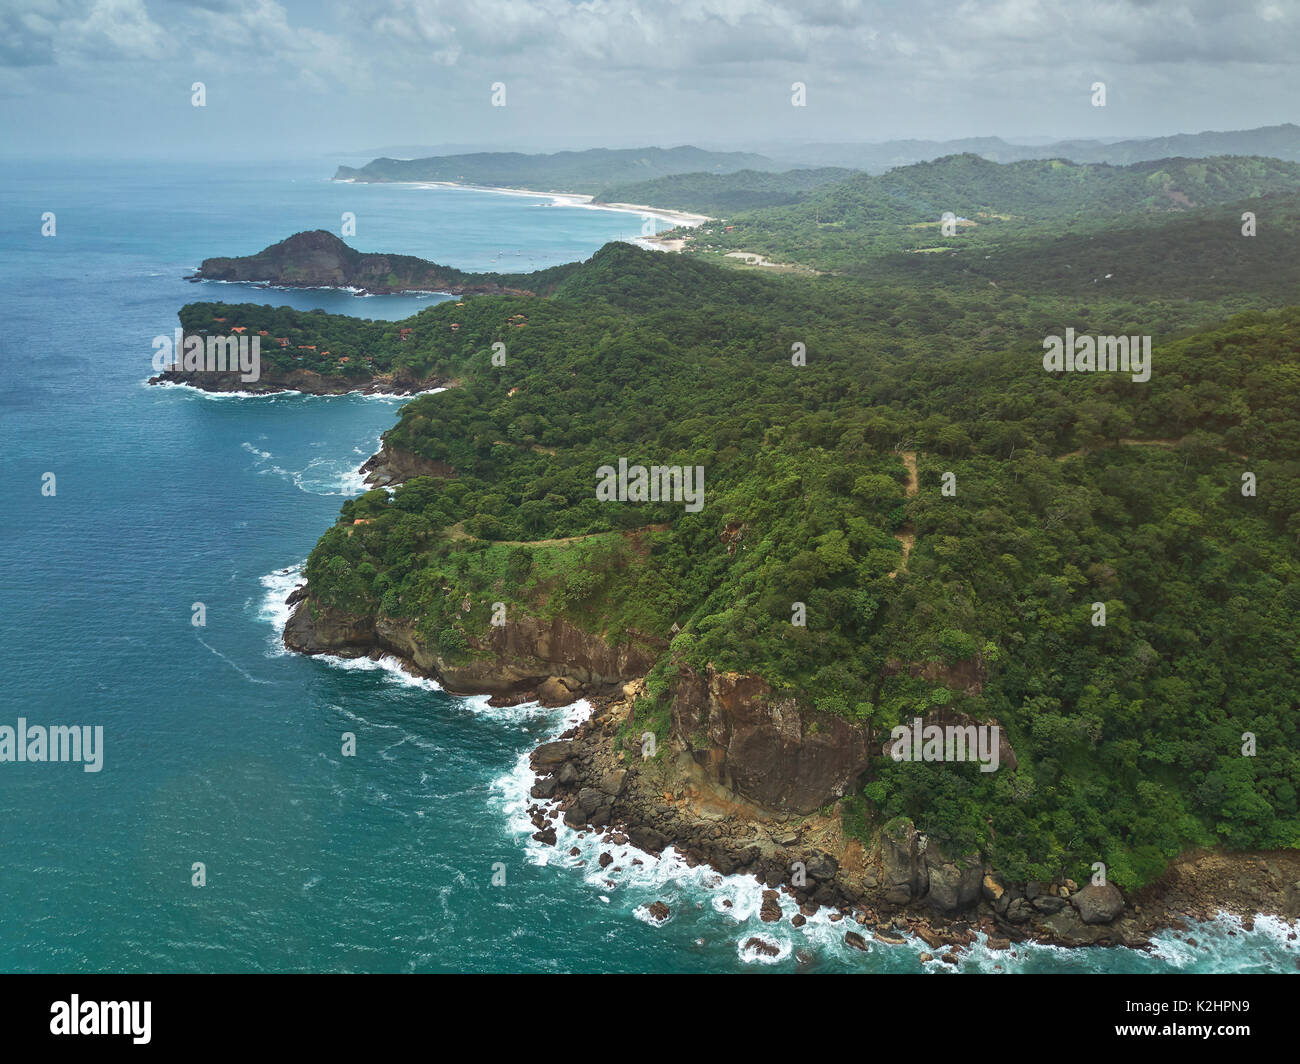 NIcaragua beach resort aerial drone view. Central america travel destination Stock Photo